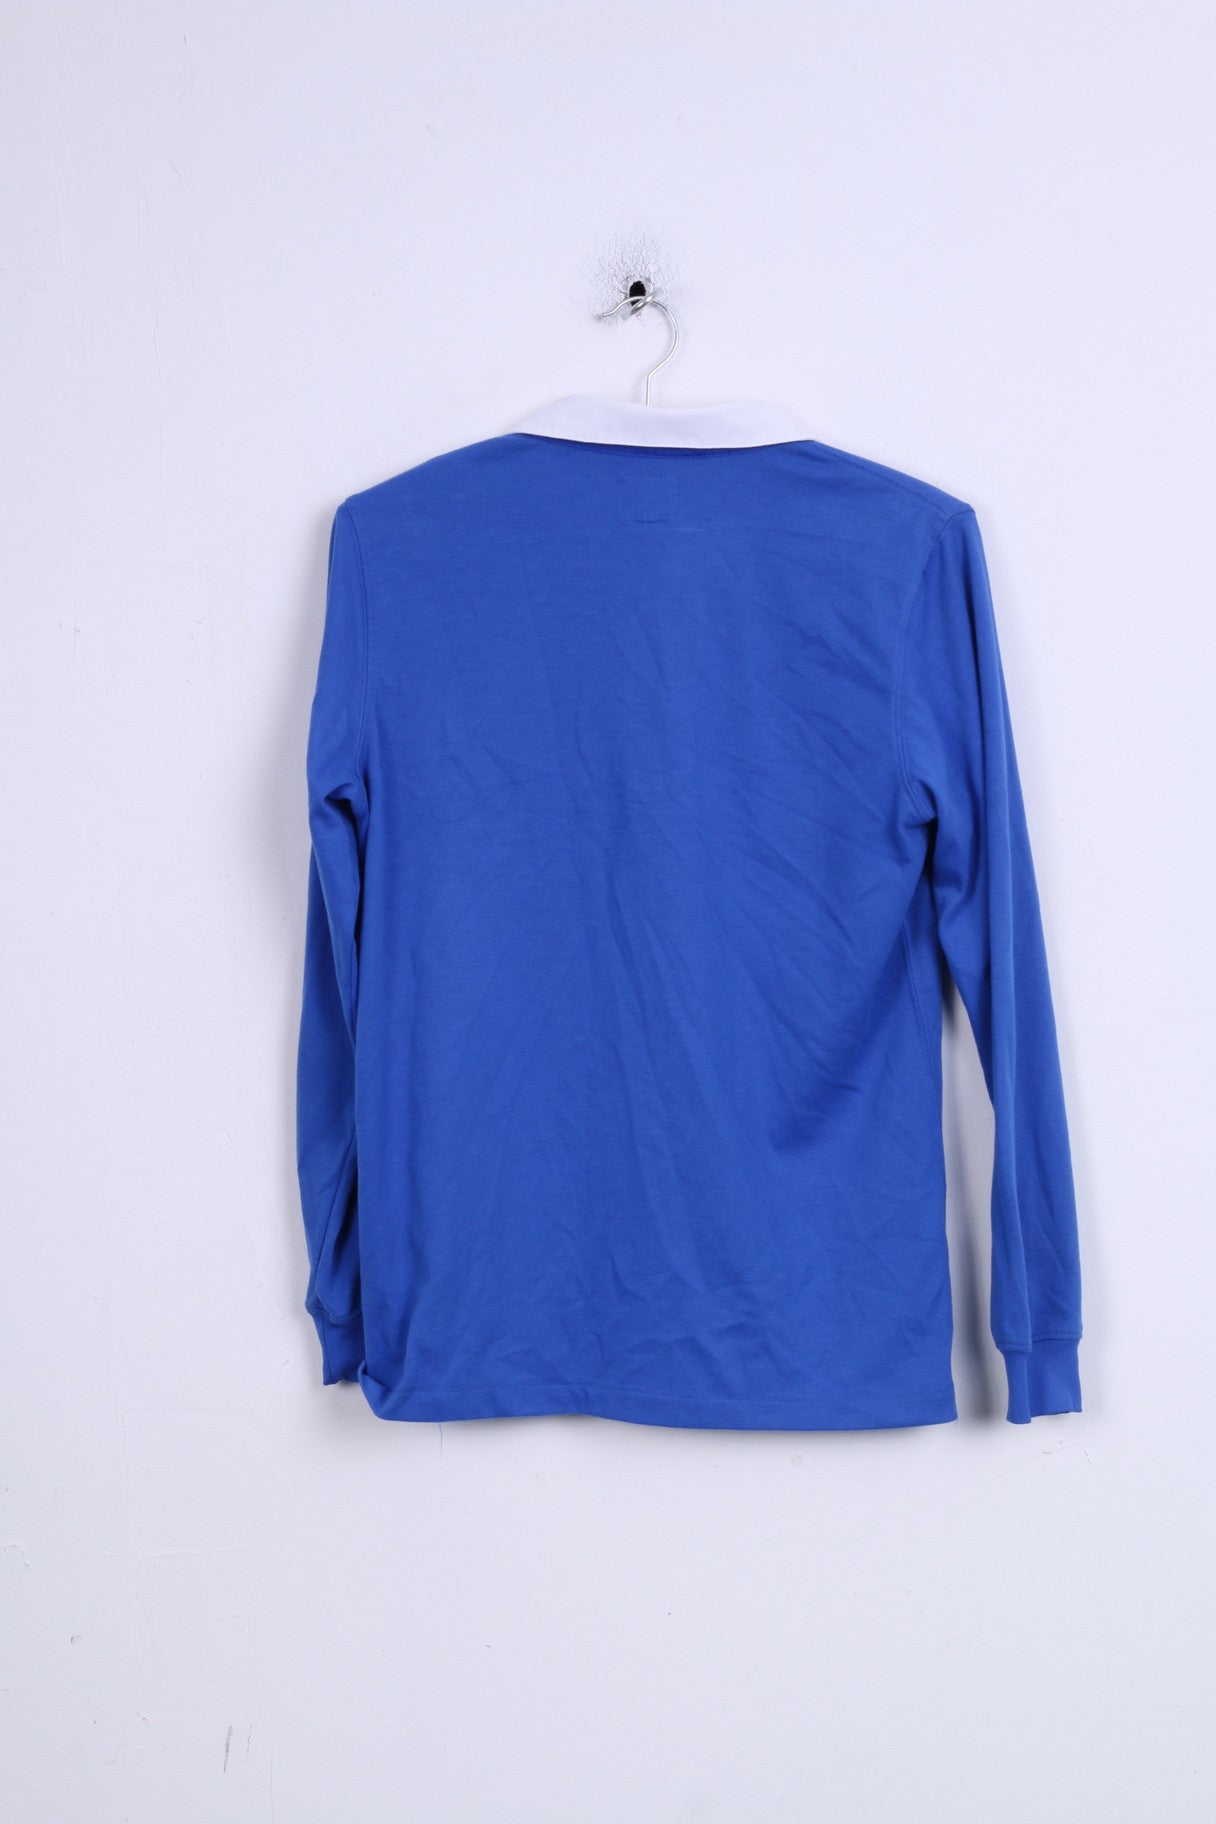 Umbro Boys 158 Long Sleeved Polo Shirt Blue Glasgow Rangers Football Club